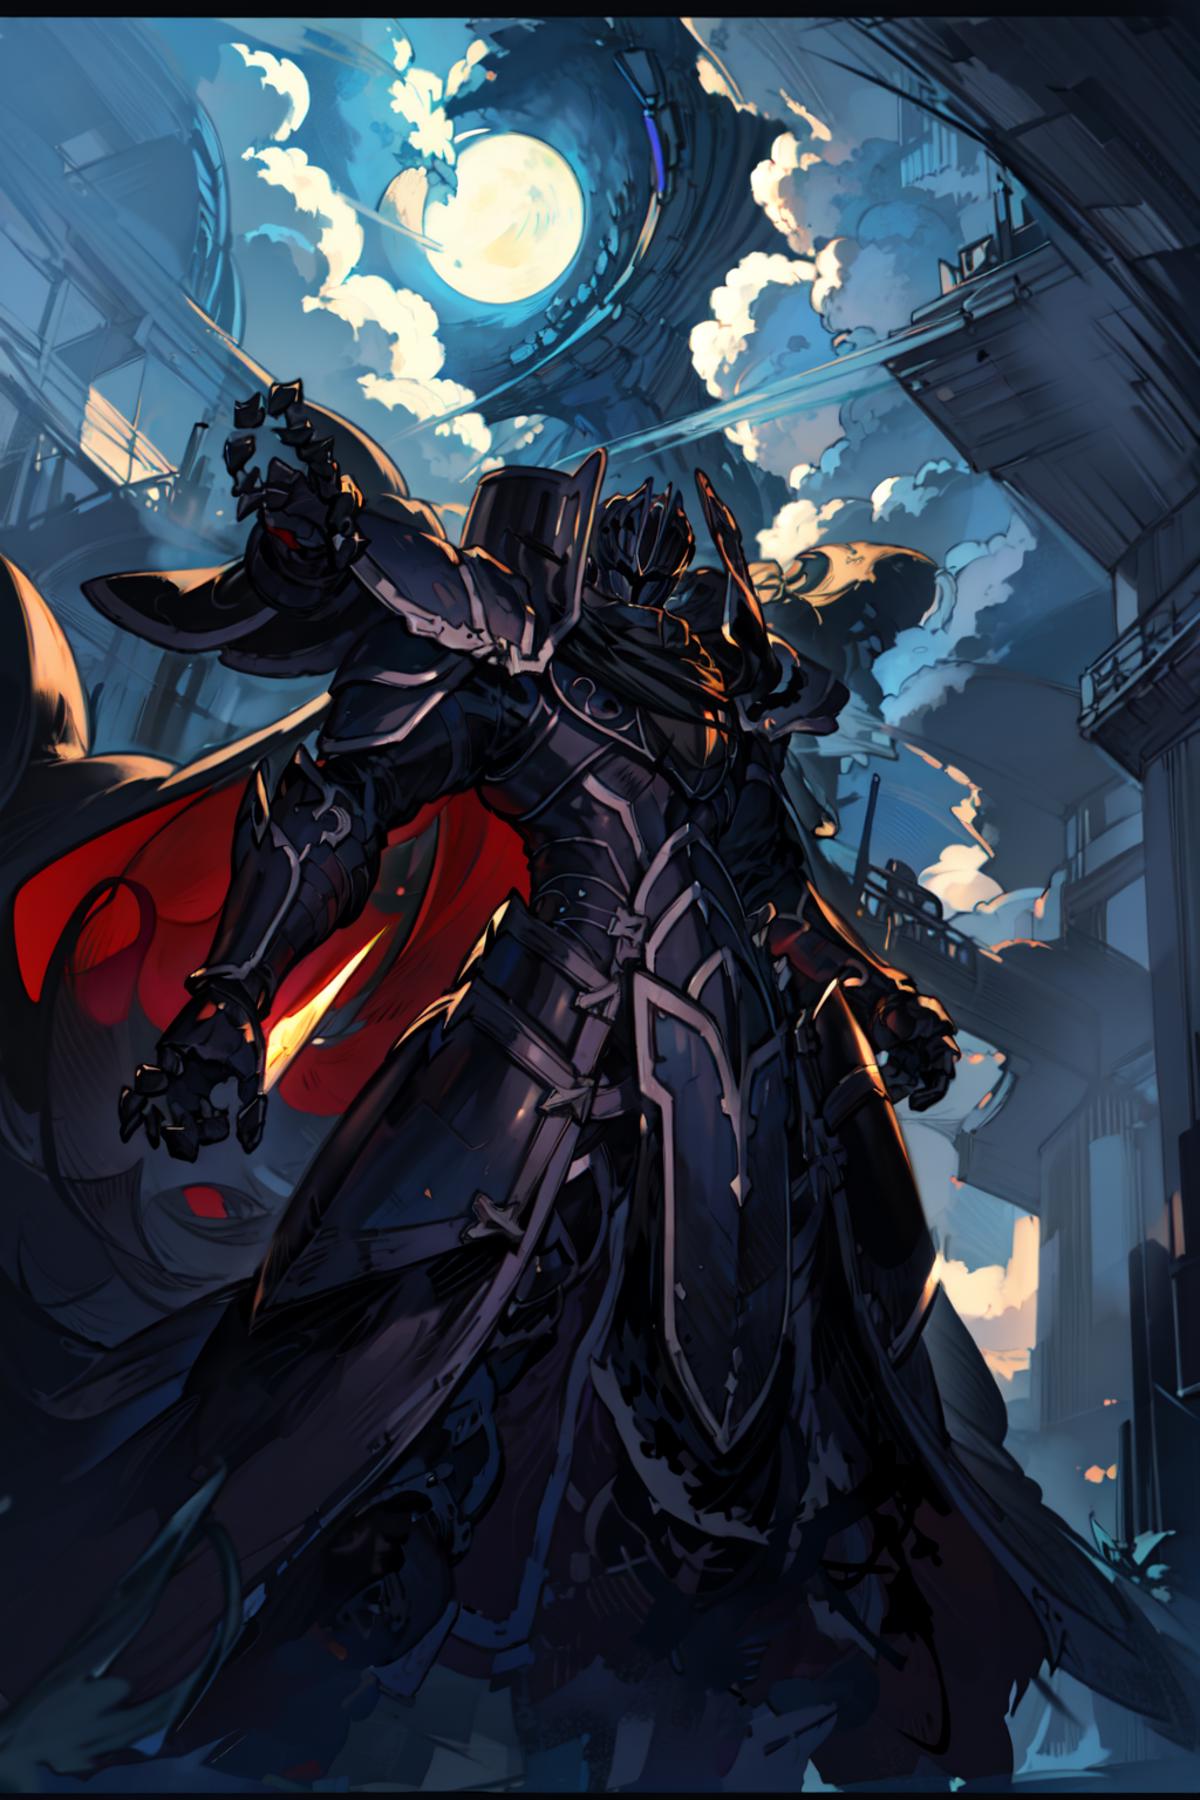 The Black Knight - Fire Emblem image by Maxx_